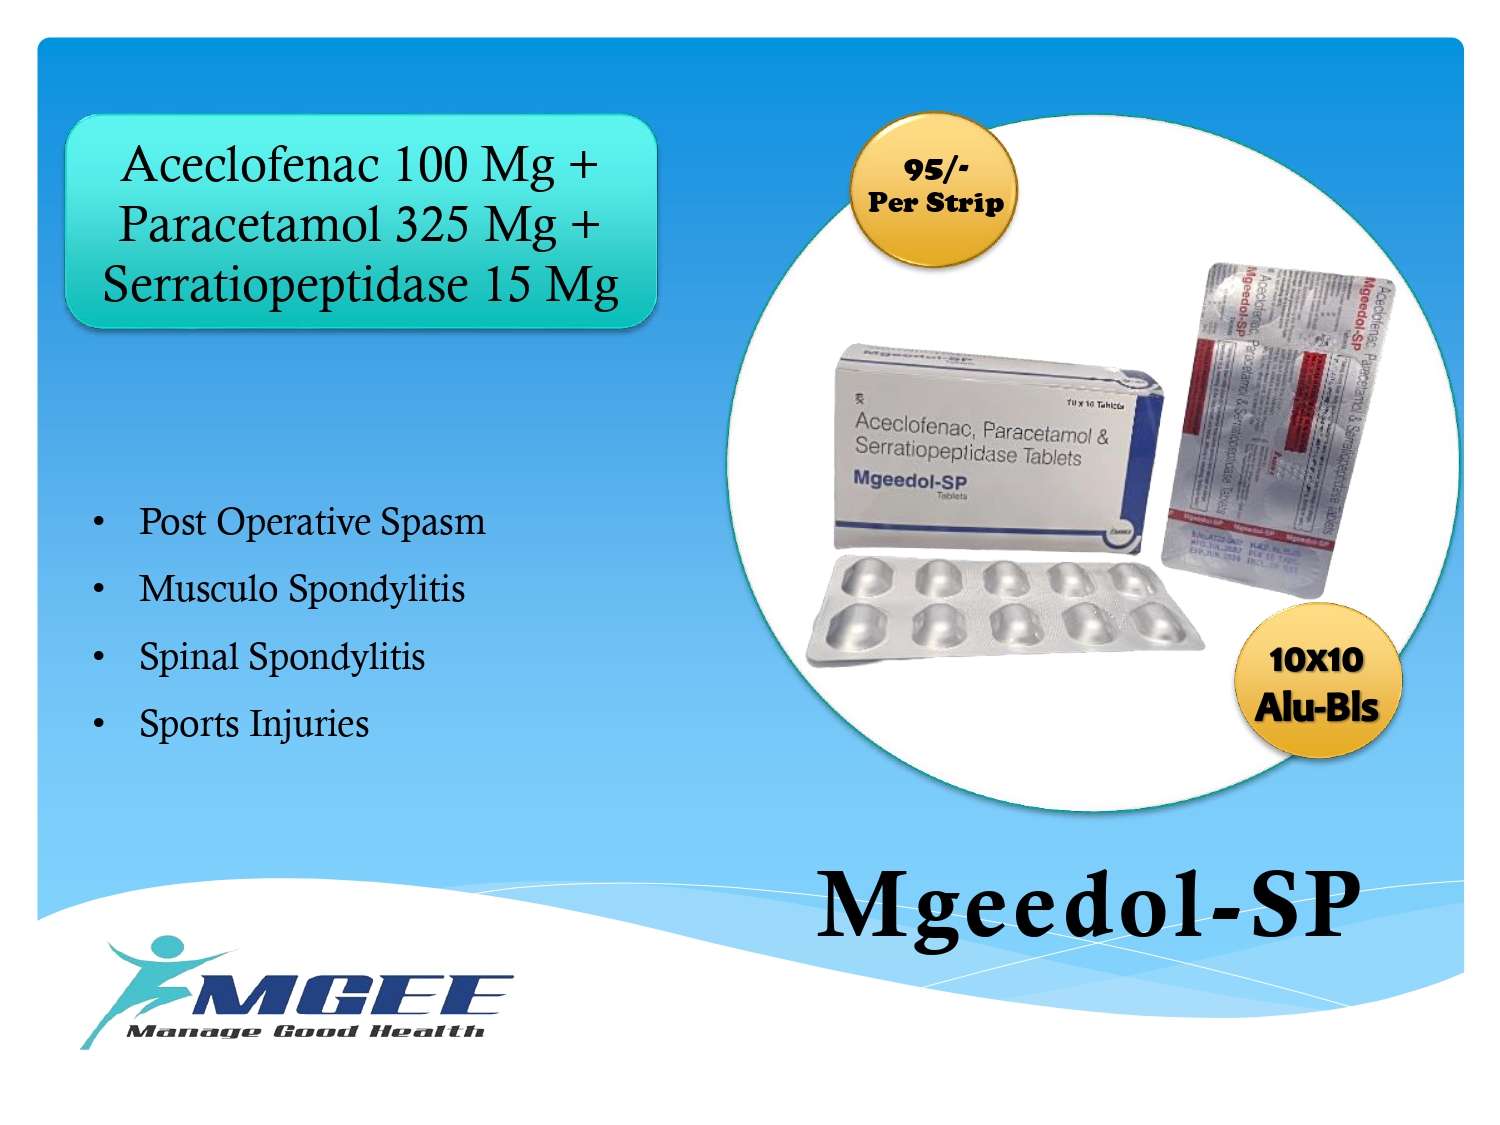 aceclofenac 100mg + paracetamol 325mg + serratiopeptidase 15mg
tablet